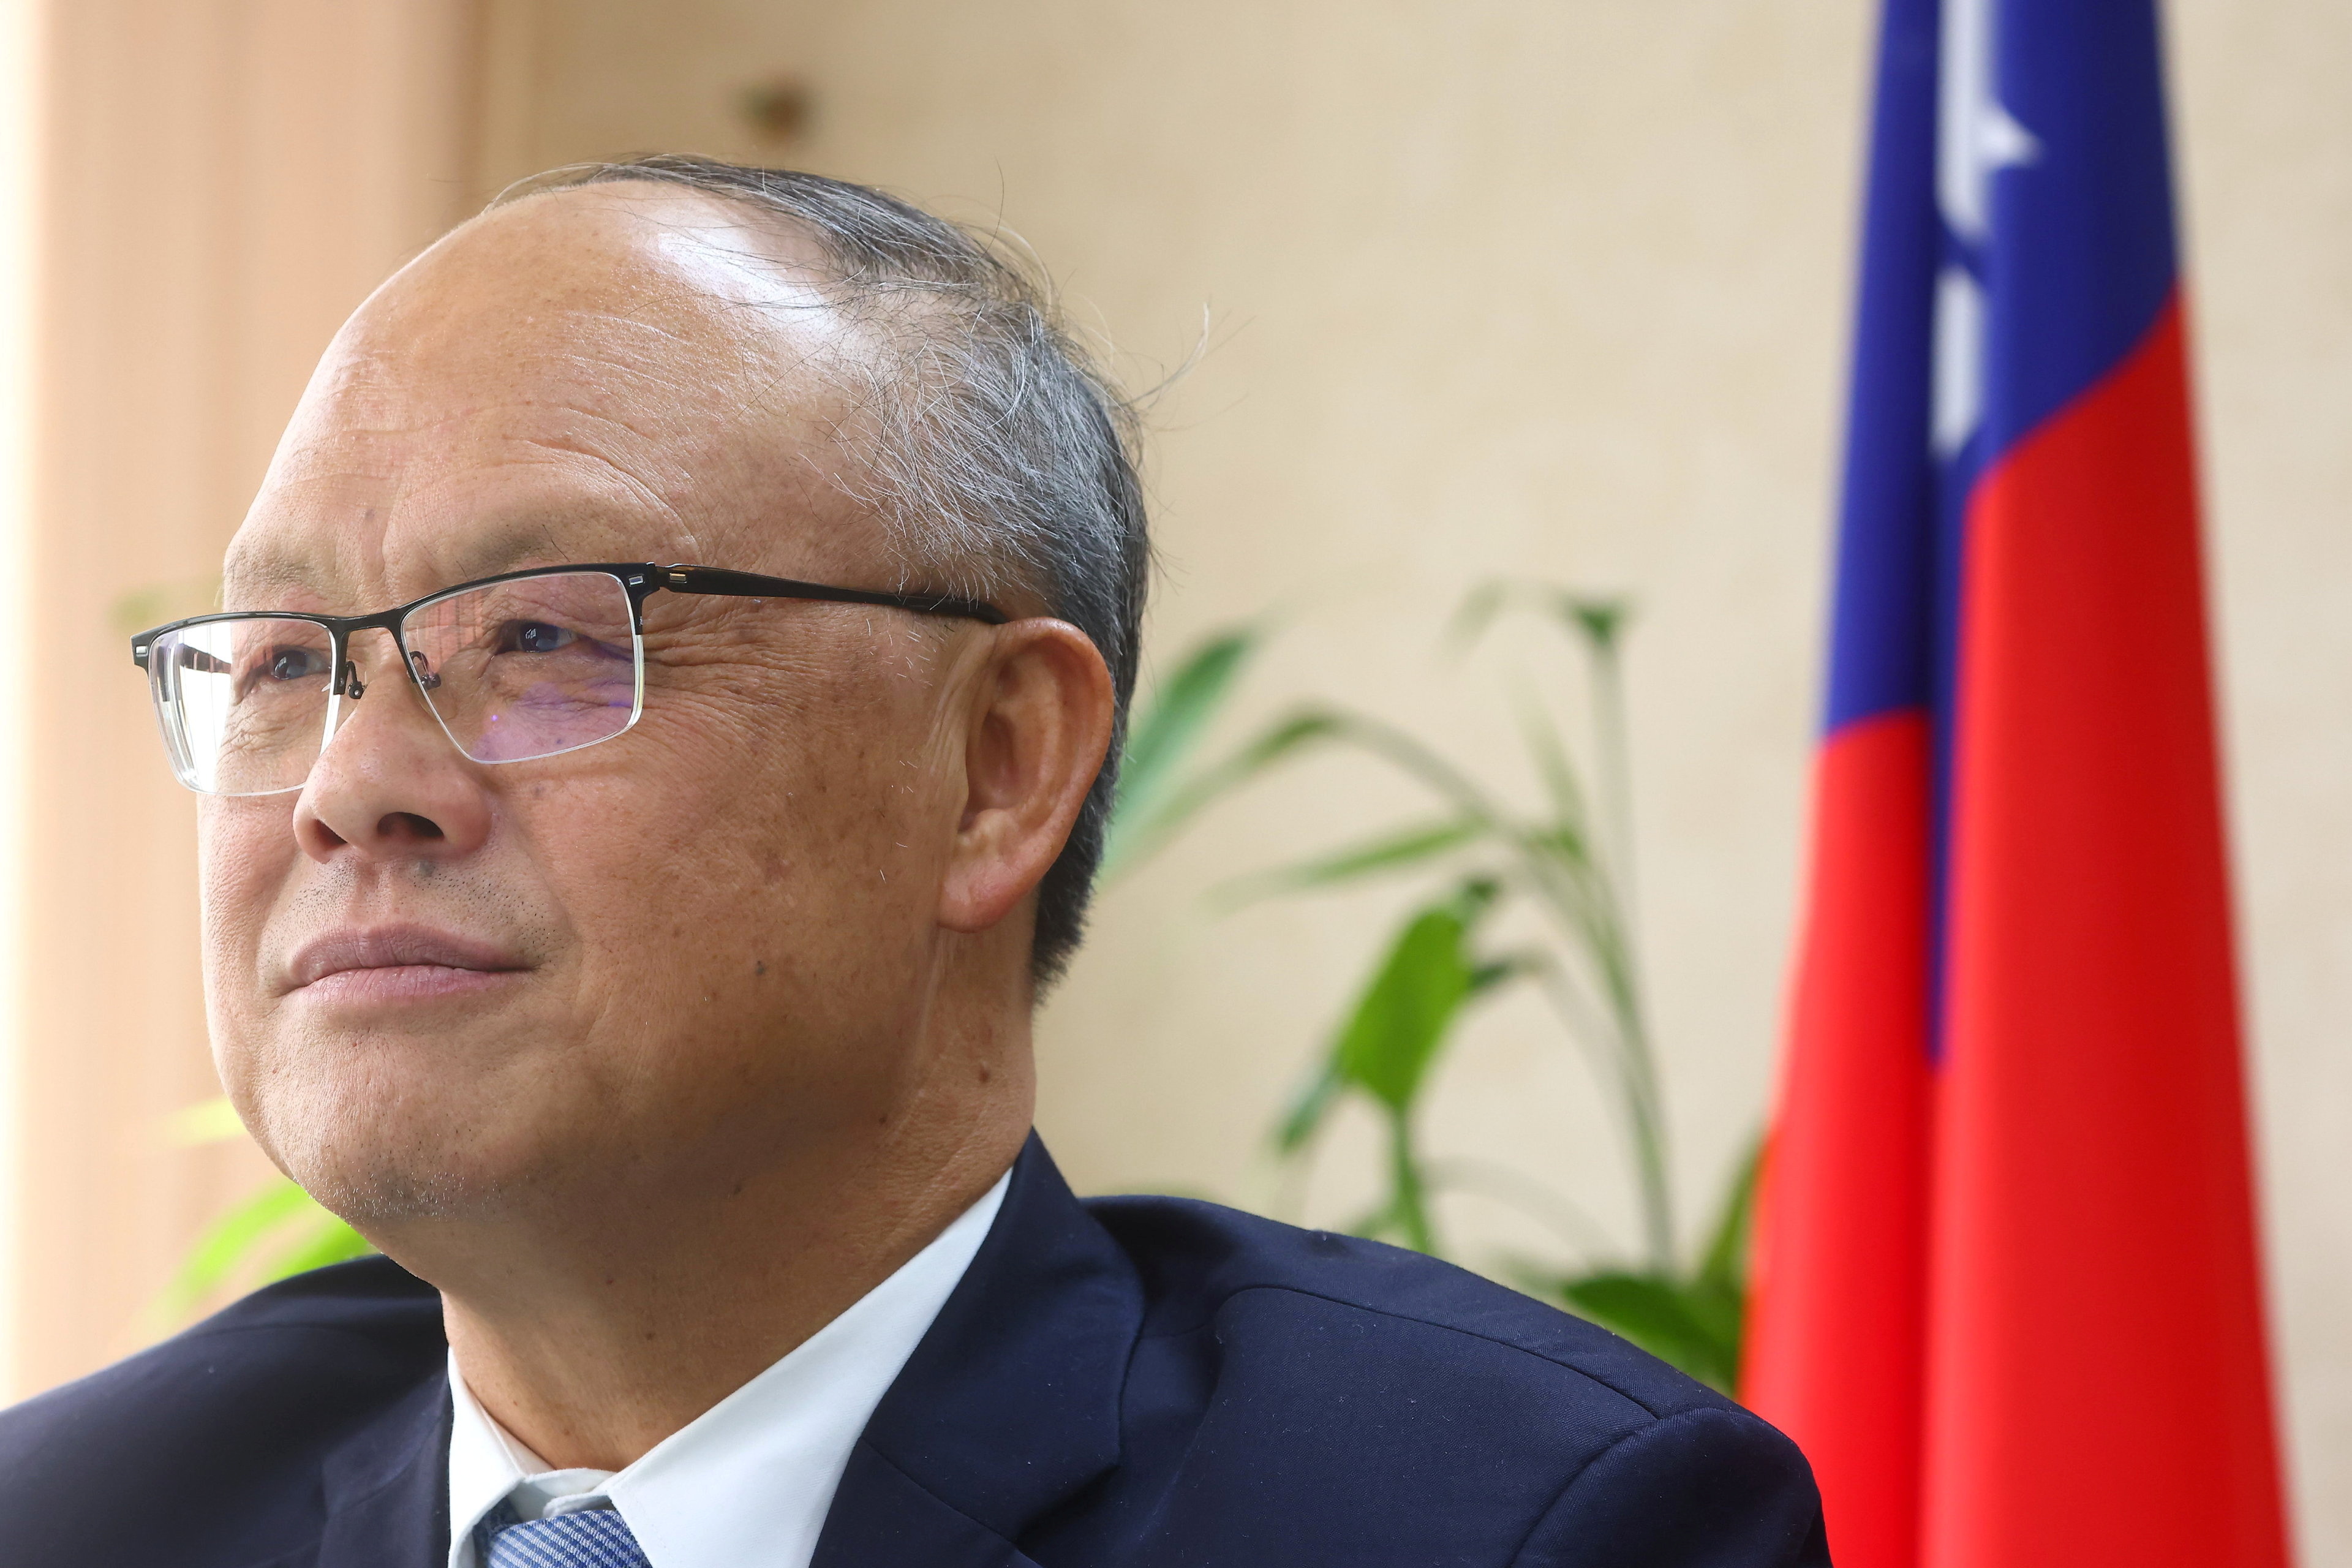 Taiwan's Chief trade negotiator John Deng looks on as he speaks to the media in Taipei